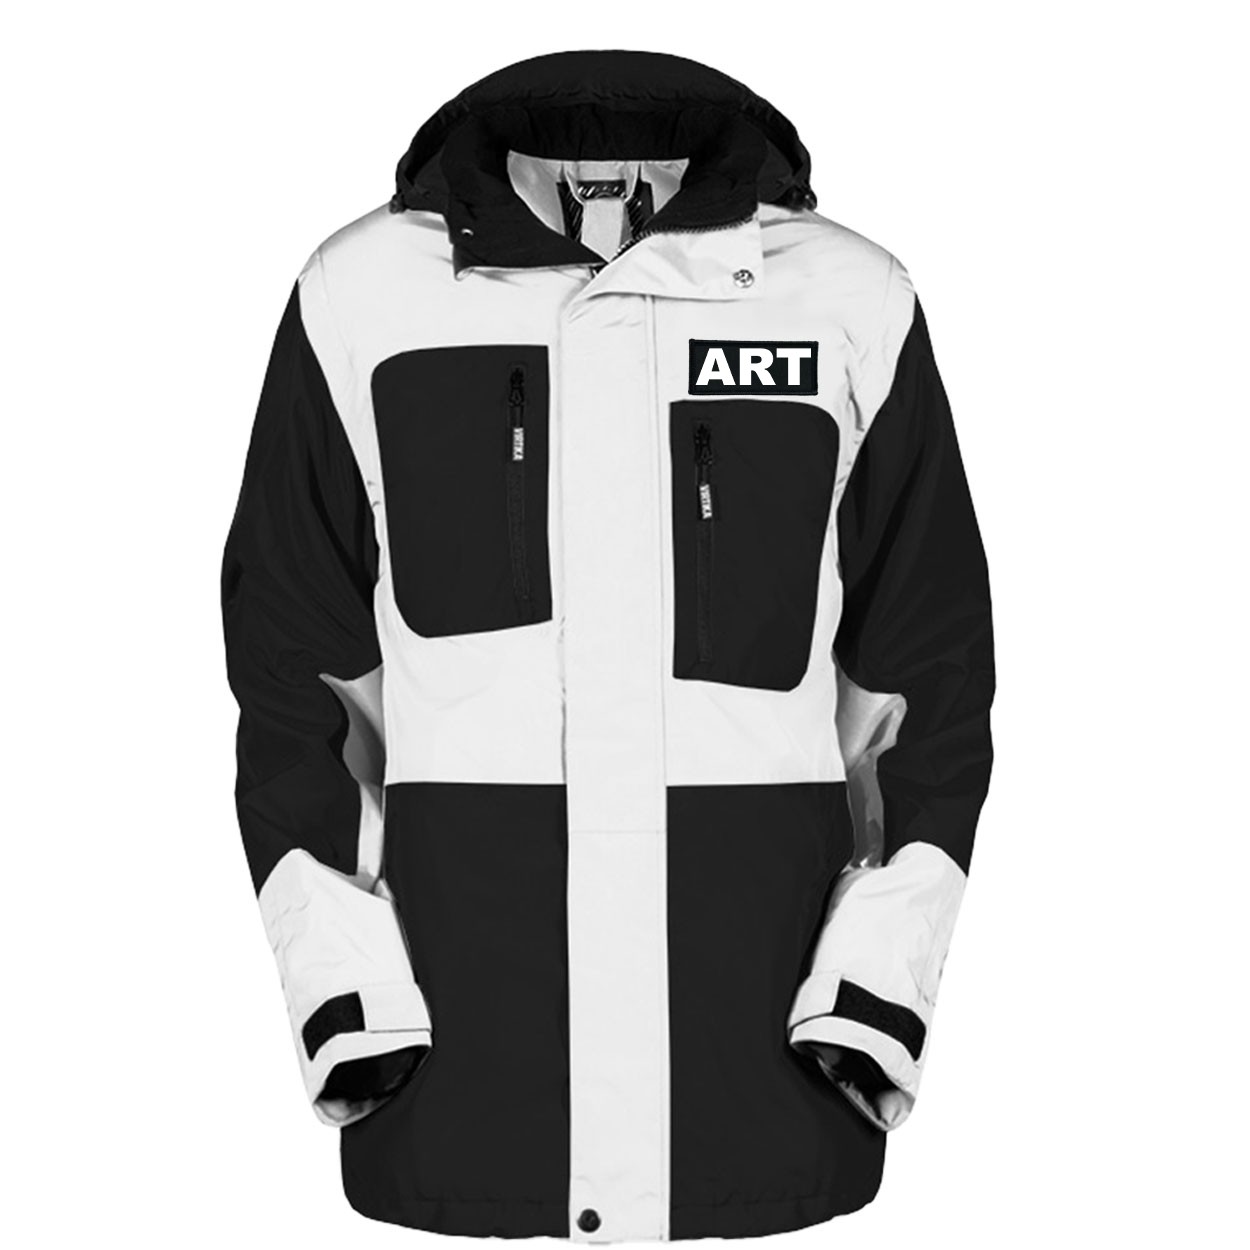 Art Brand Logo Classic Woven Patch Pro Snowboard Jacket (Black/White)